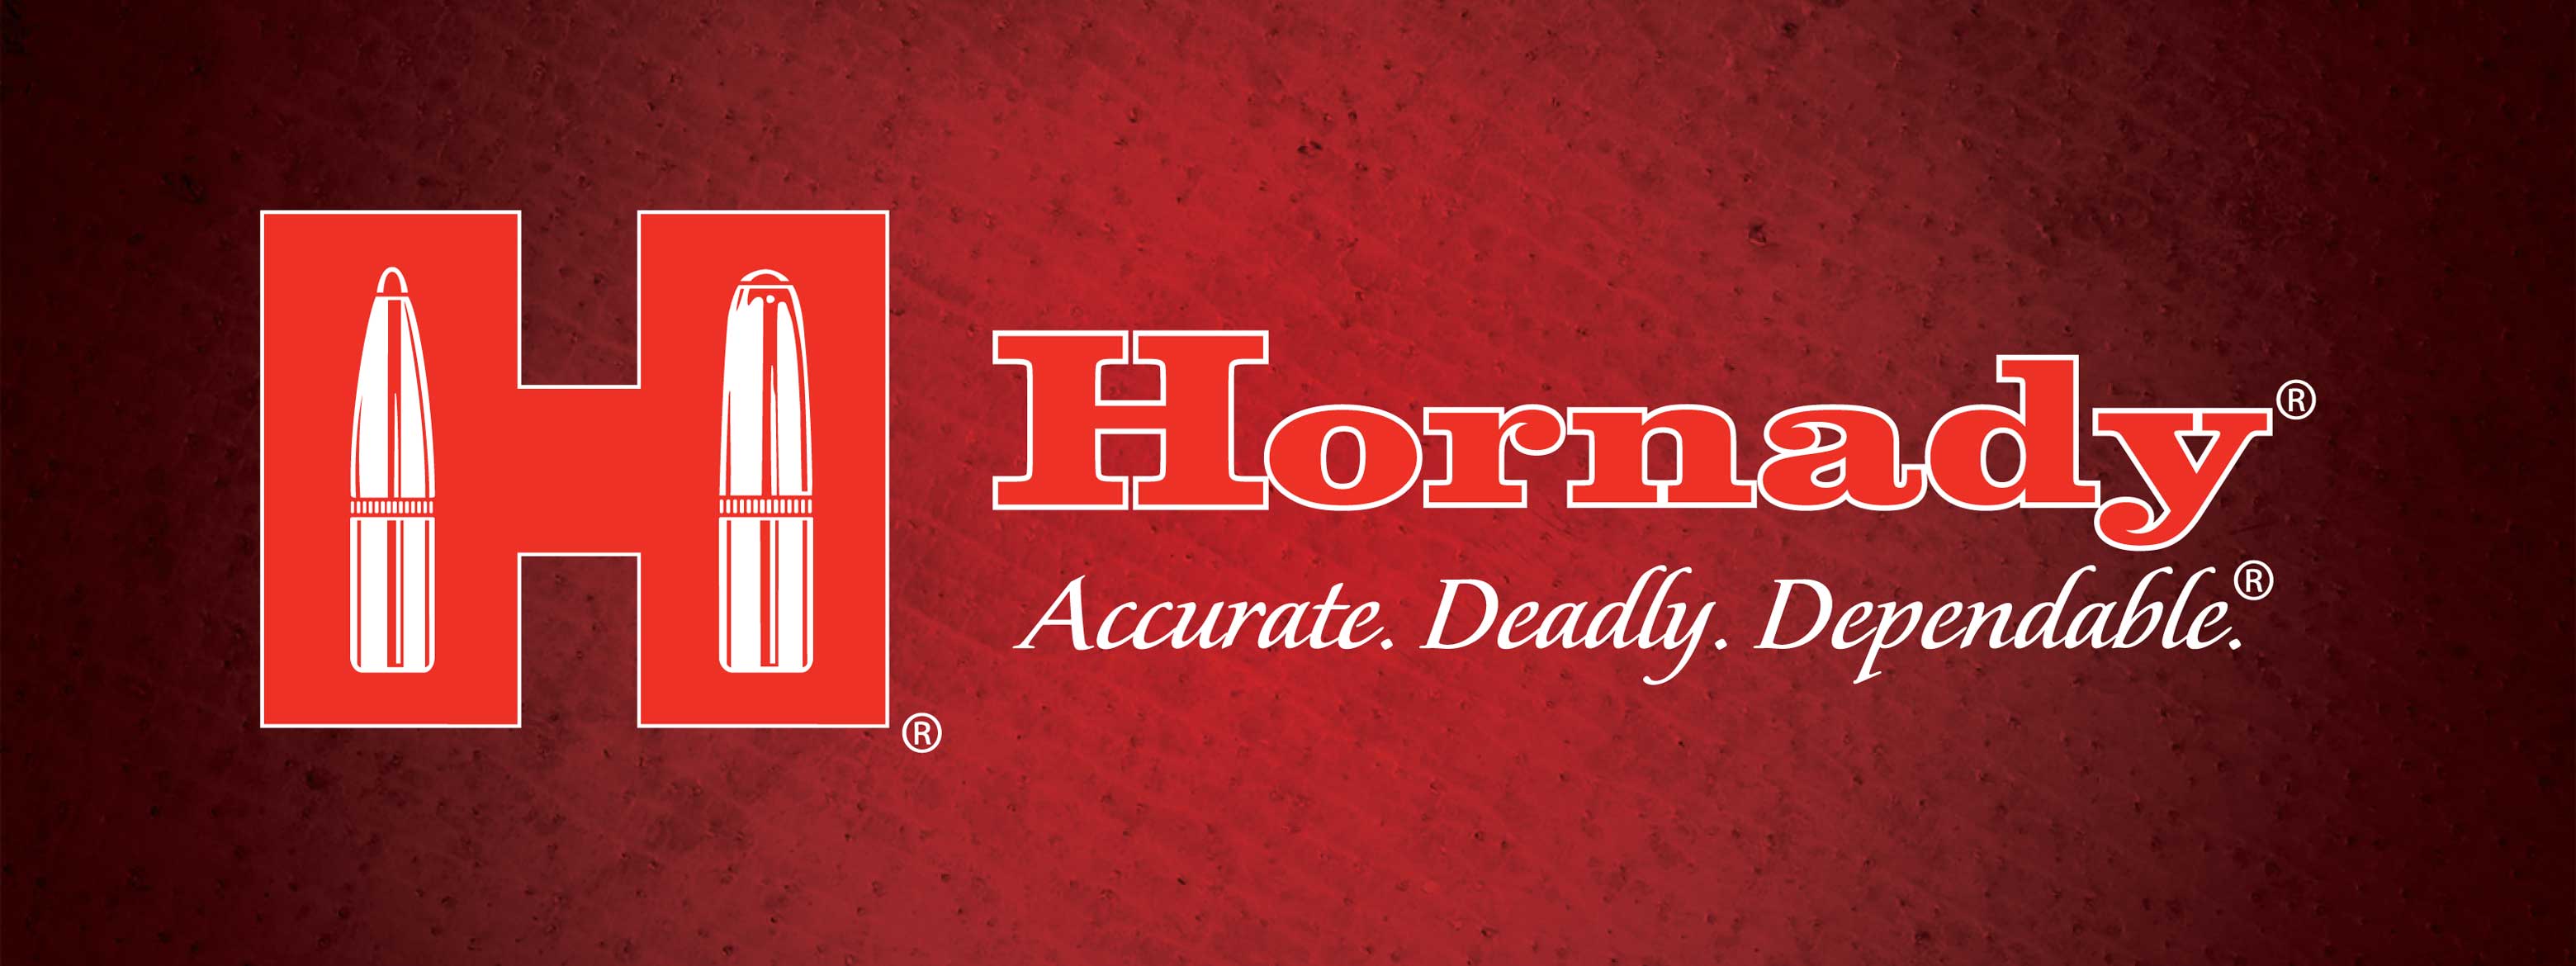 Hornady Logo - Hornady | West Texas Big Bobcat Contest